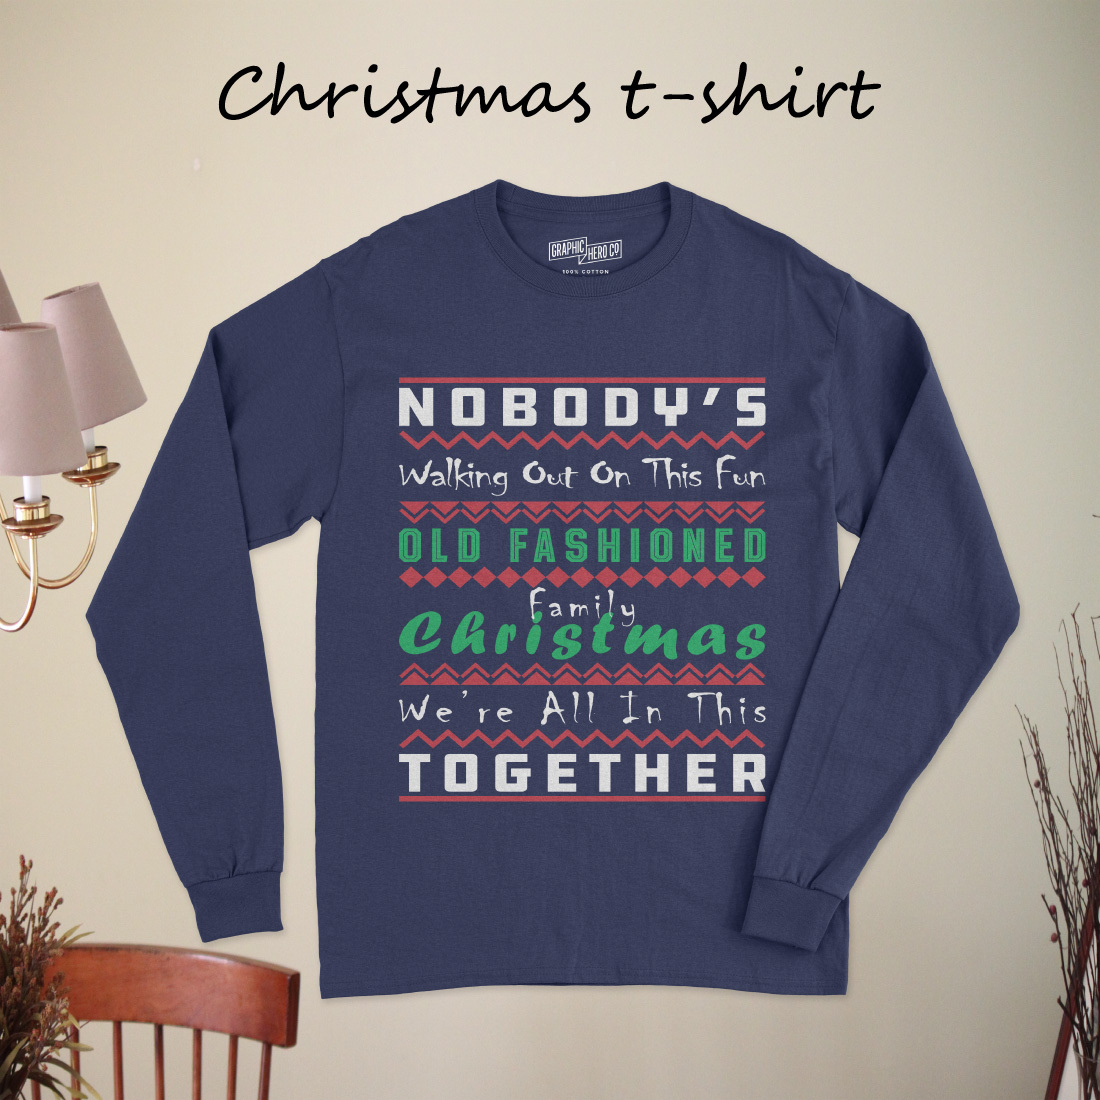 Christmas t-shirt design preview image.